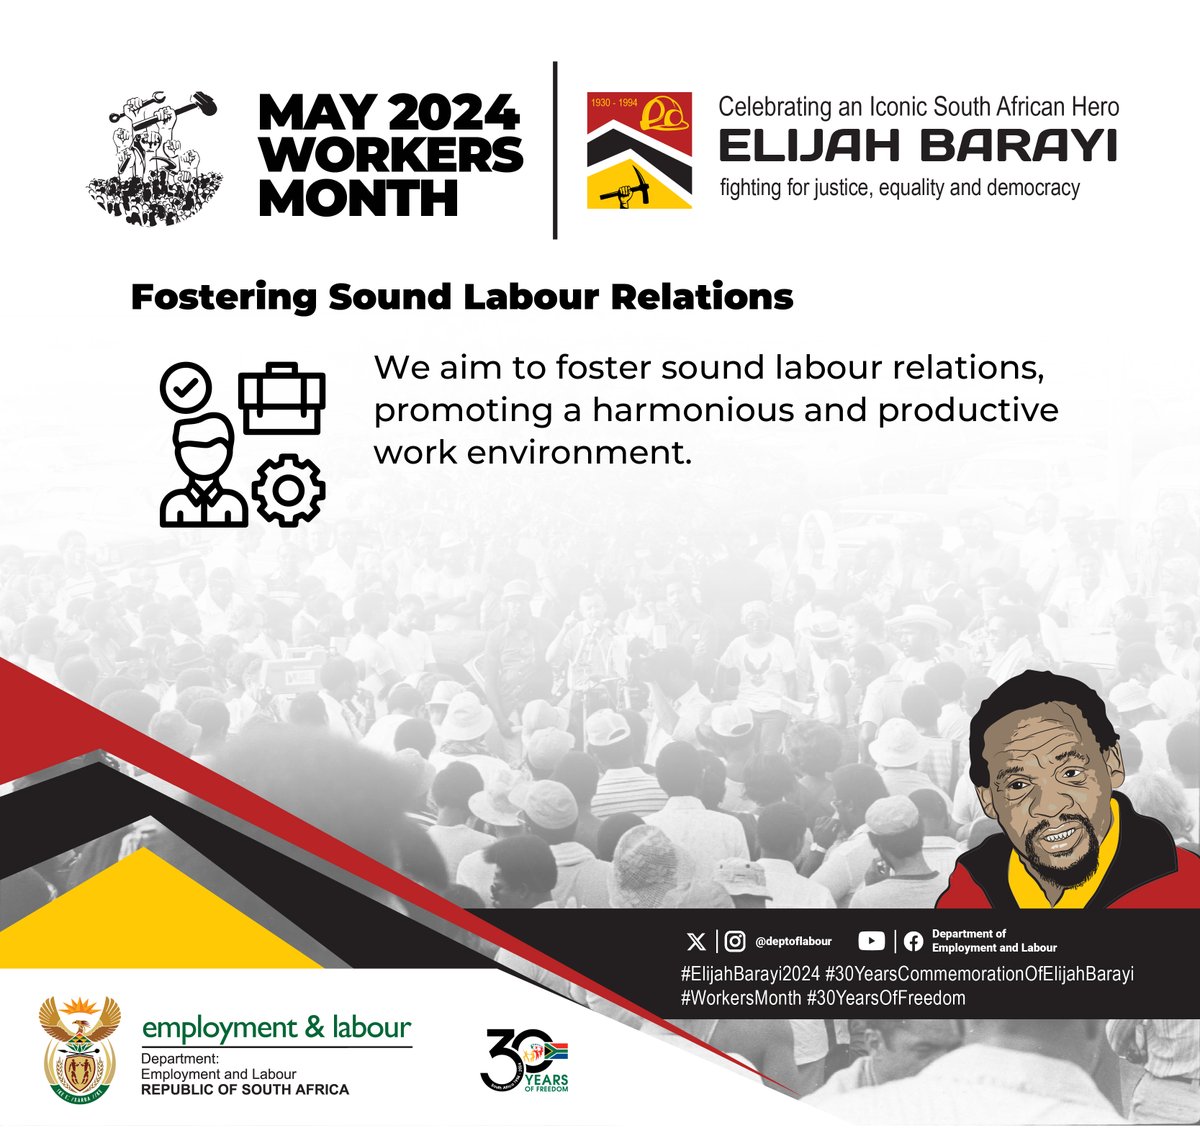 [Infographic] Fostering Sound Labour Relations #ElijahBarayi2024 #30YearsCommemorationOfElijahBarayi
#WorkersMonth #30YearsOfFreedom